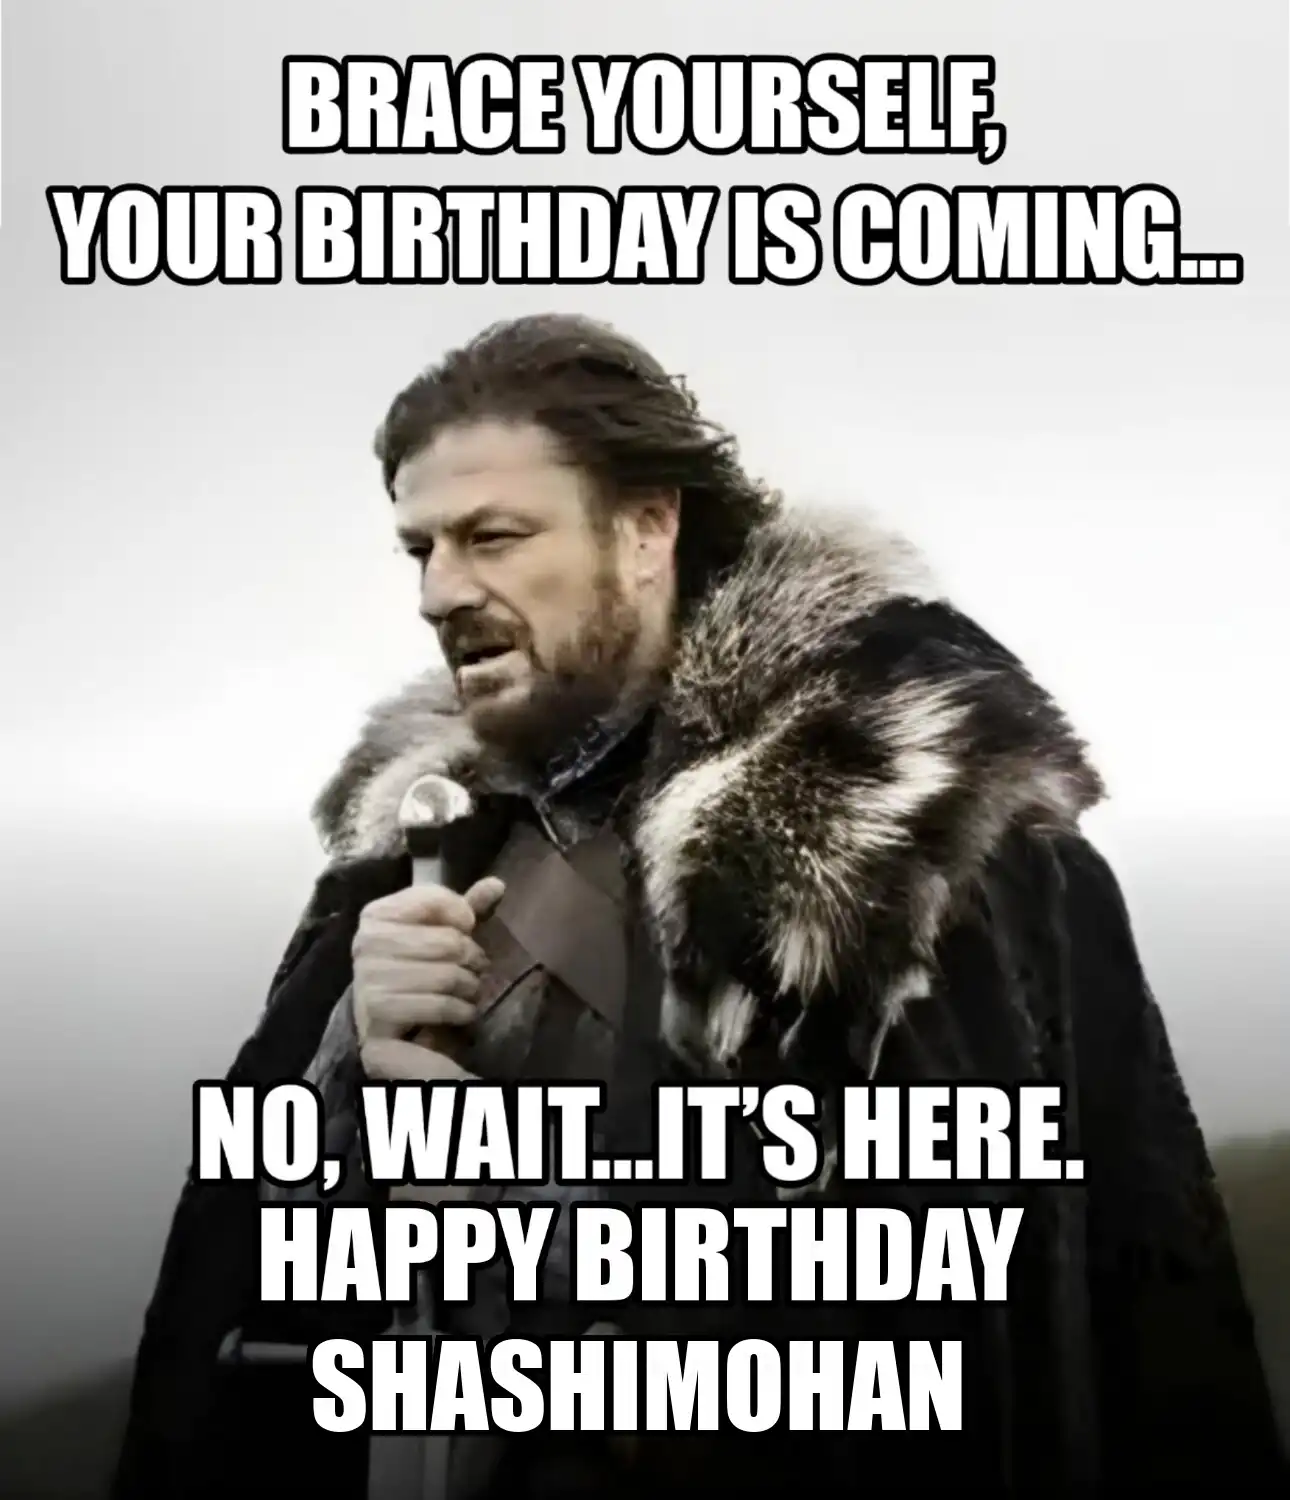 Happy Birthday Shashimohan Brace Yourself Your Birthday Is Coming Meme